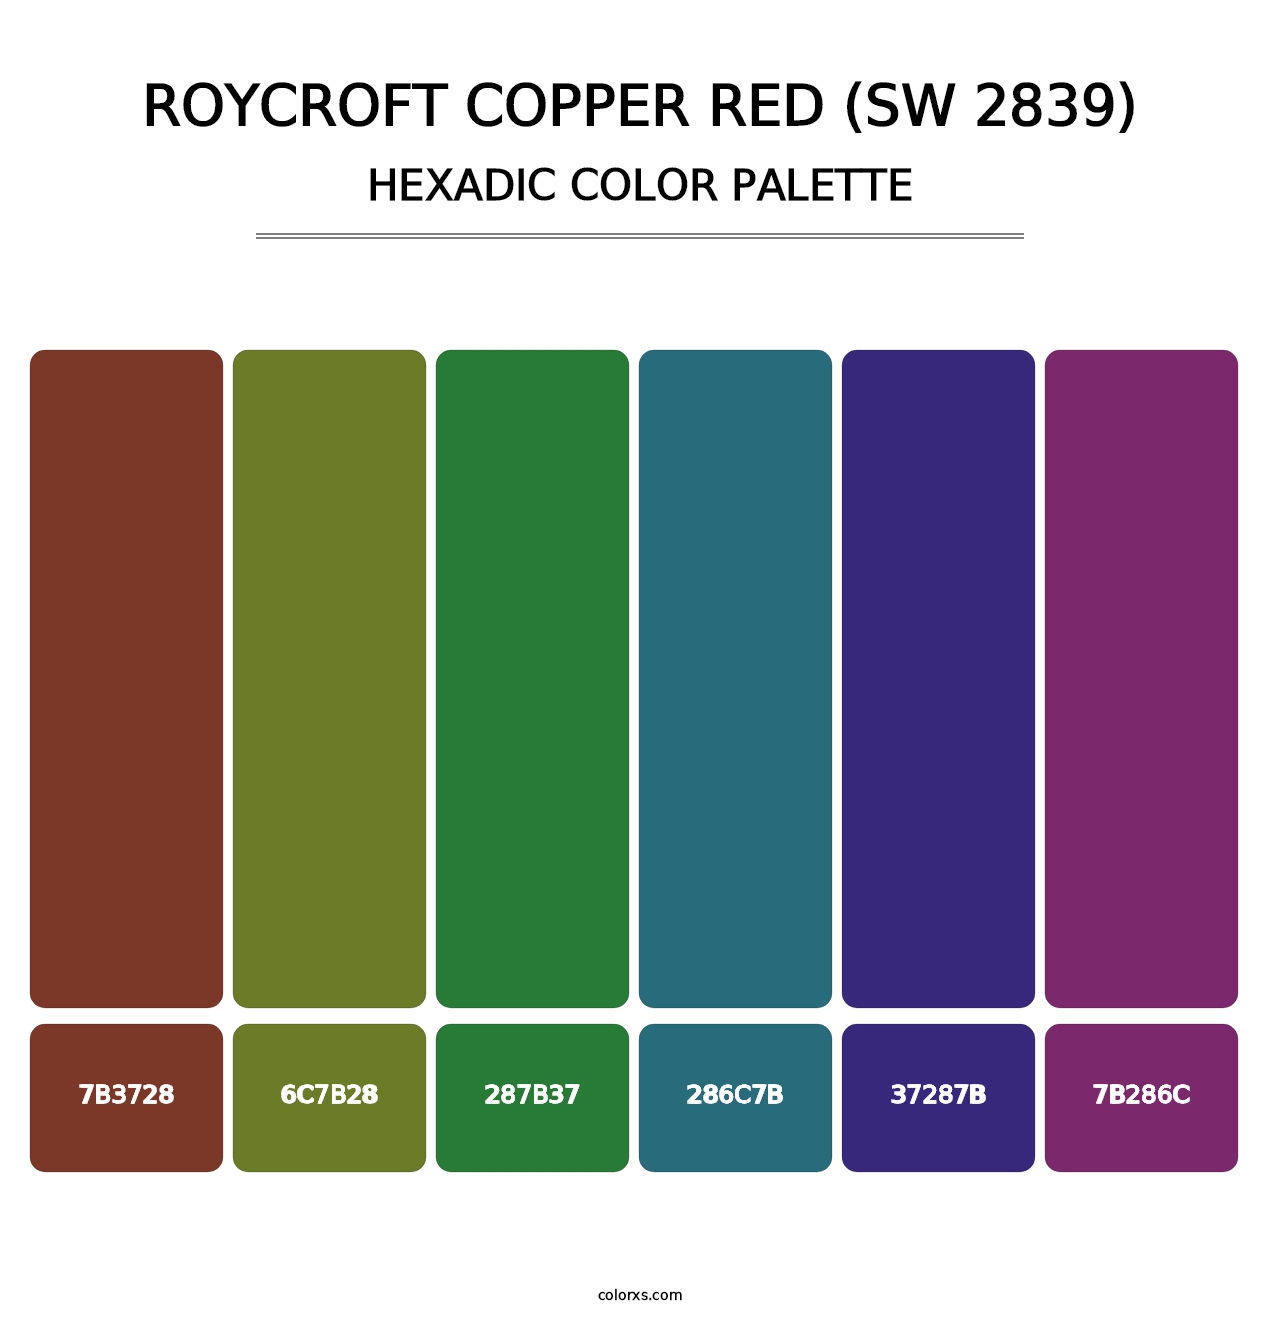 Roycroft Copper Red (SW 2839) - Hexadic Color Palette